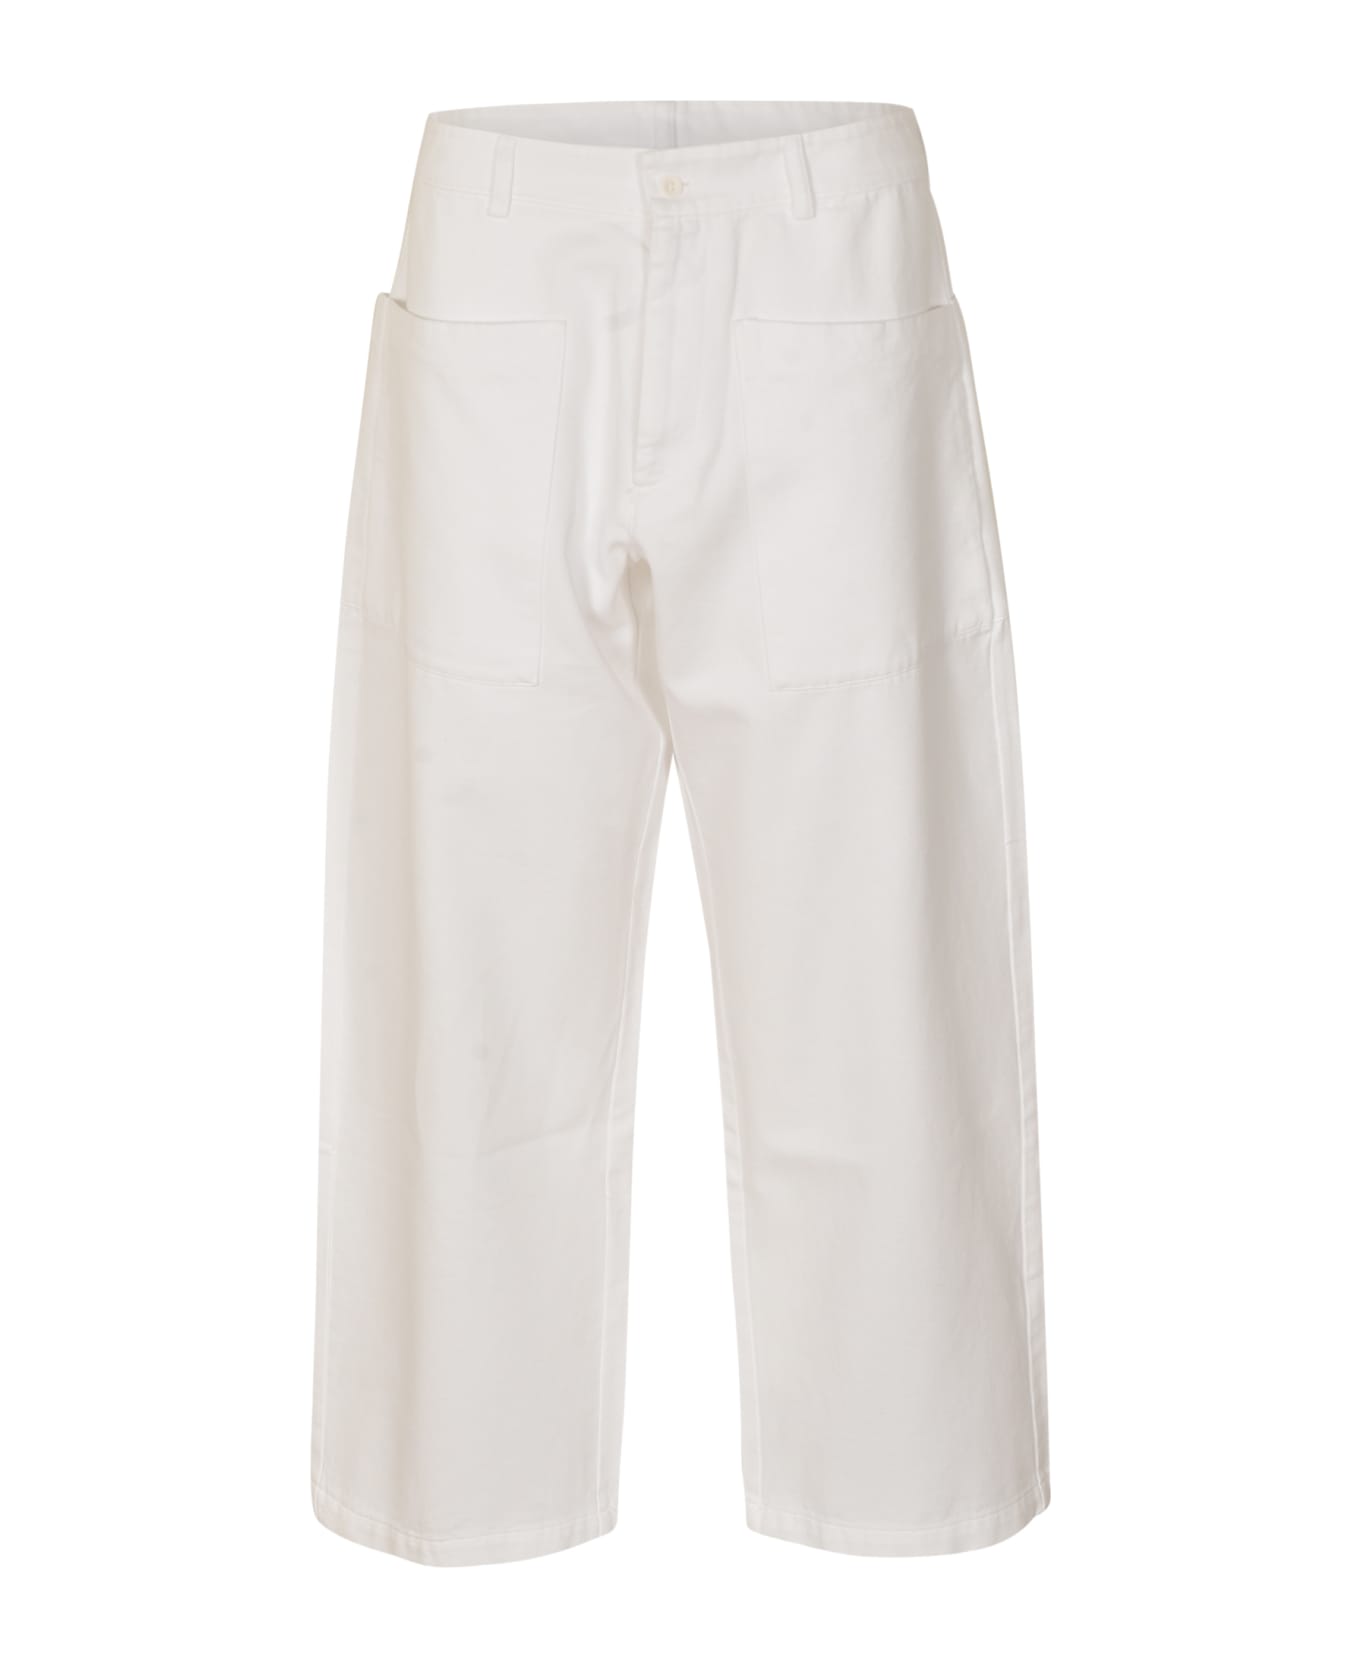 Labo.Art Fuoco Trousers - White ボトムス